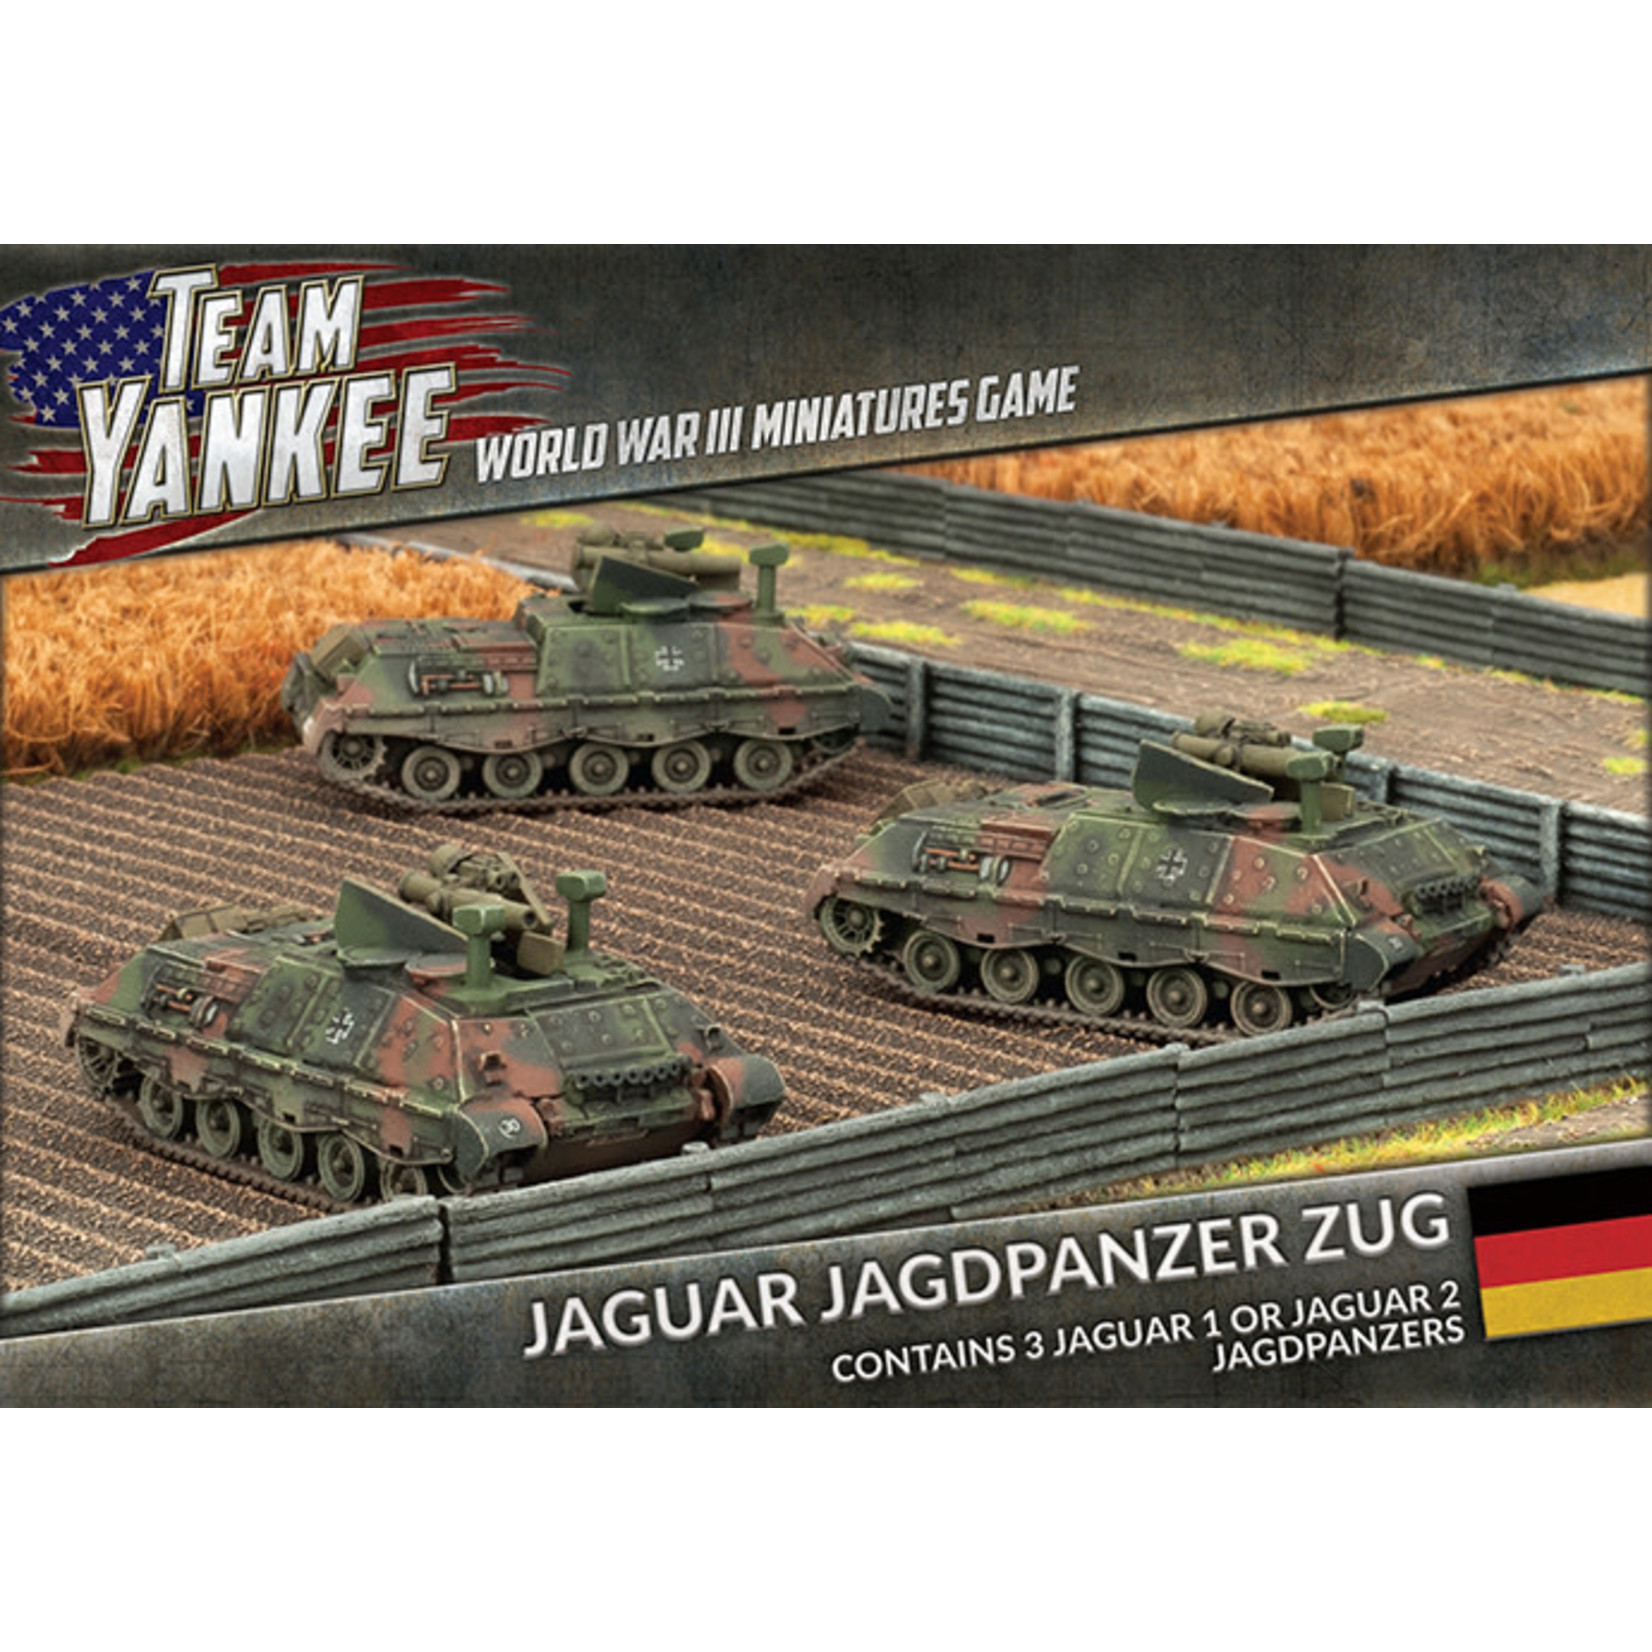 Battlefront Miniatures Jaguar Jagdpanzer Zug (German)